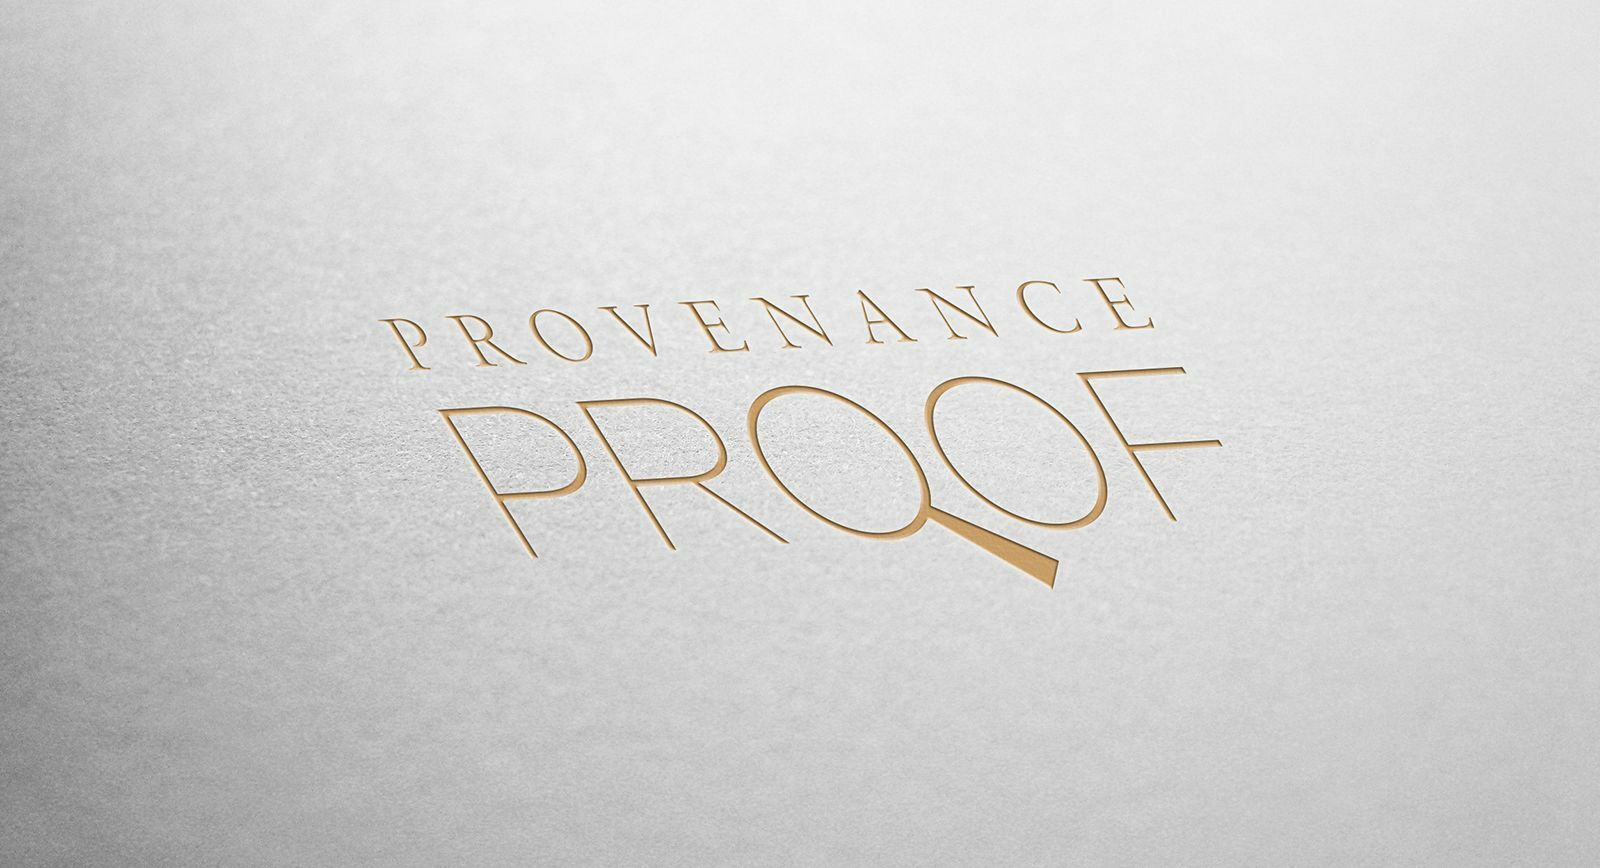 Provenance Proof Blockchain